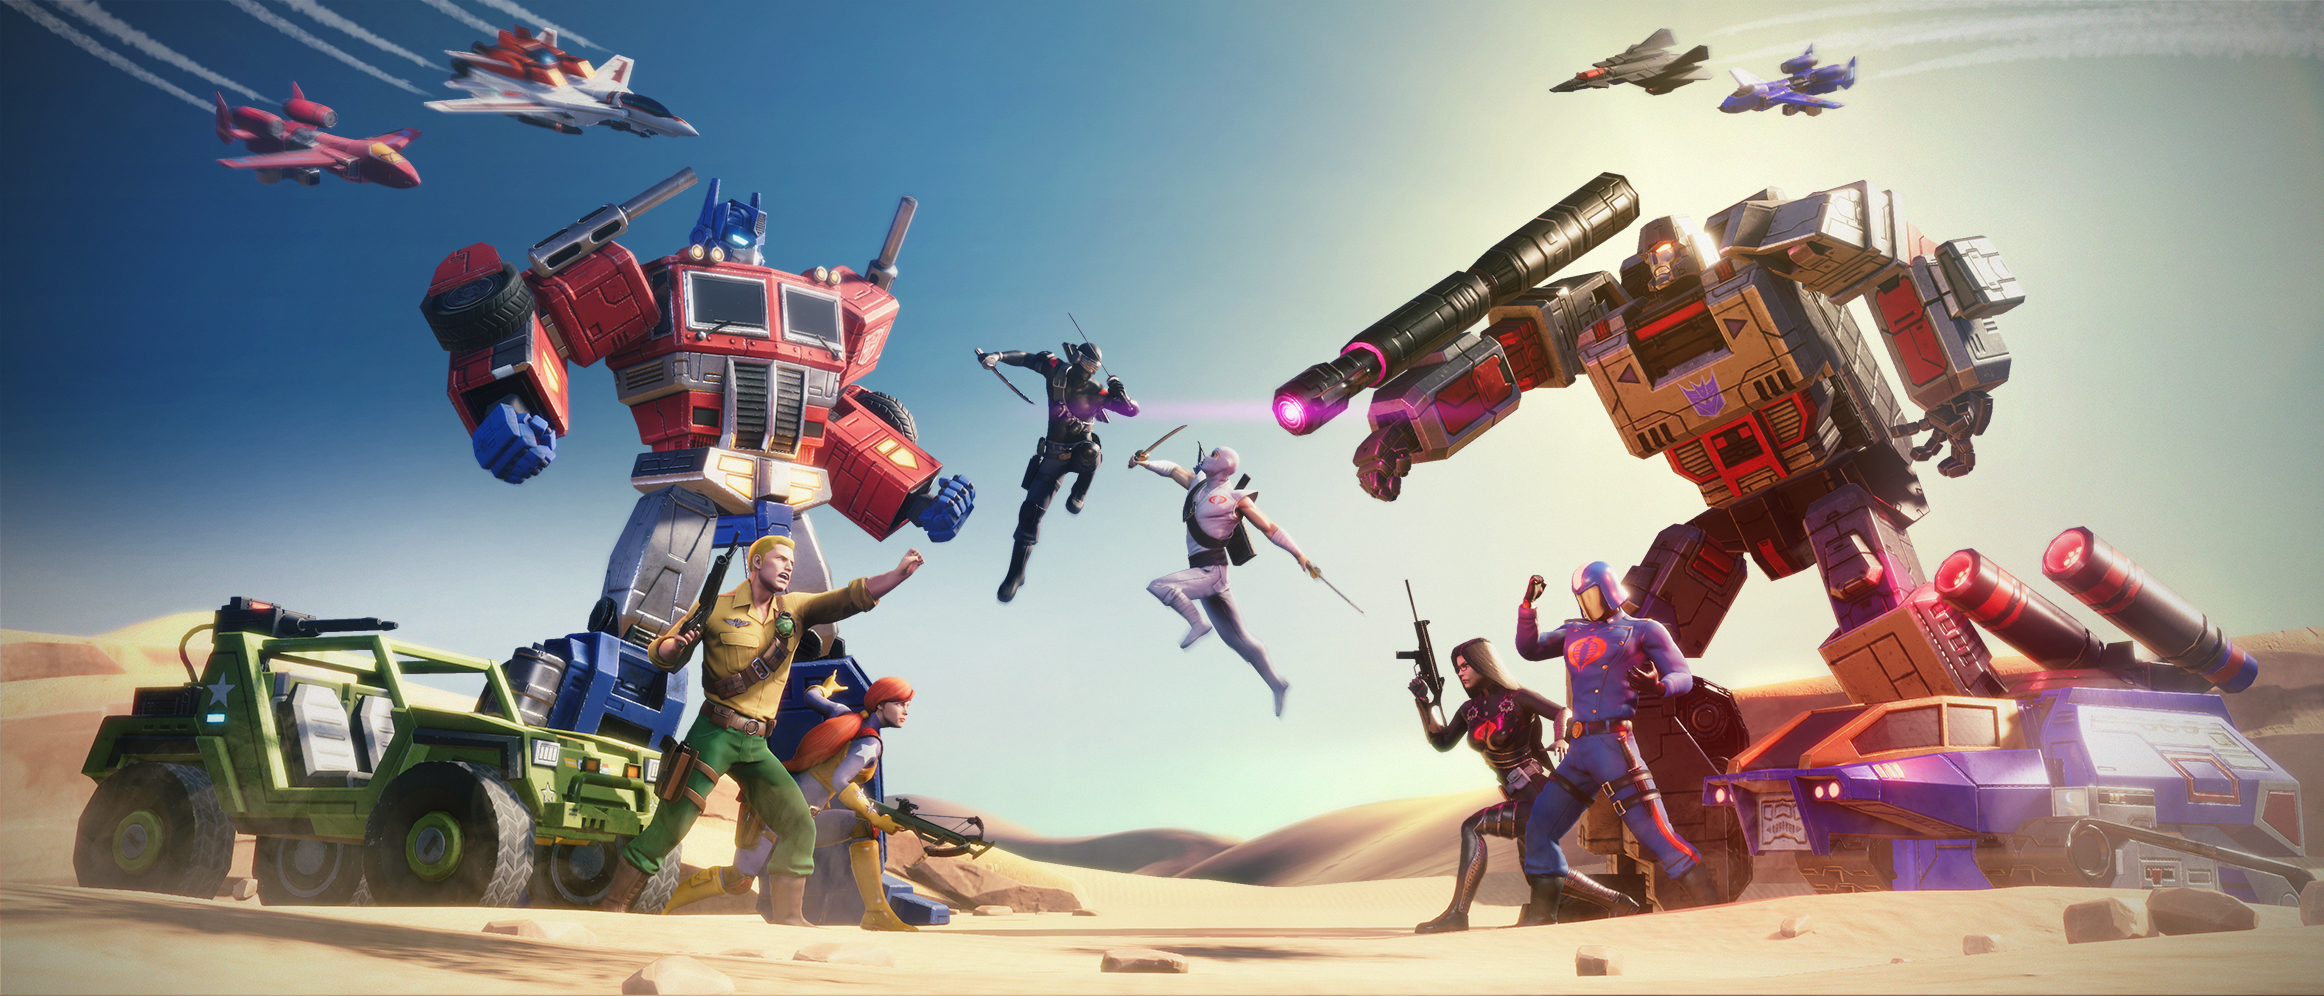 Gi Joe And The Autobots Battle Cobra And The Decepticons - Transformers Earth Wars Gi Joe - HD Wallpaper 